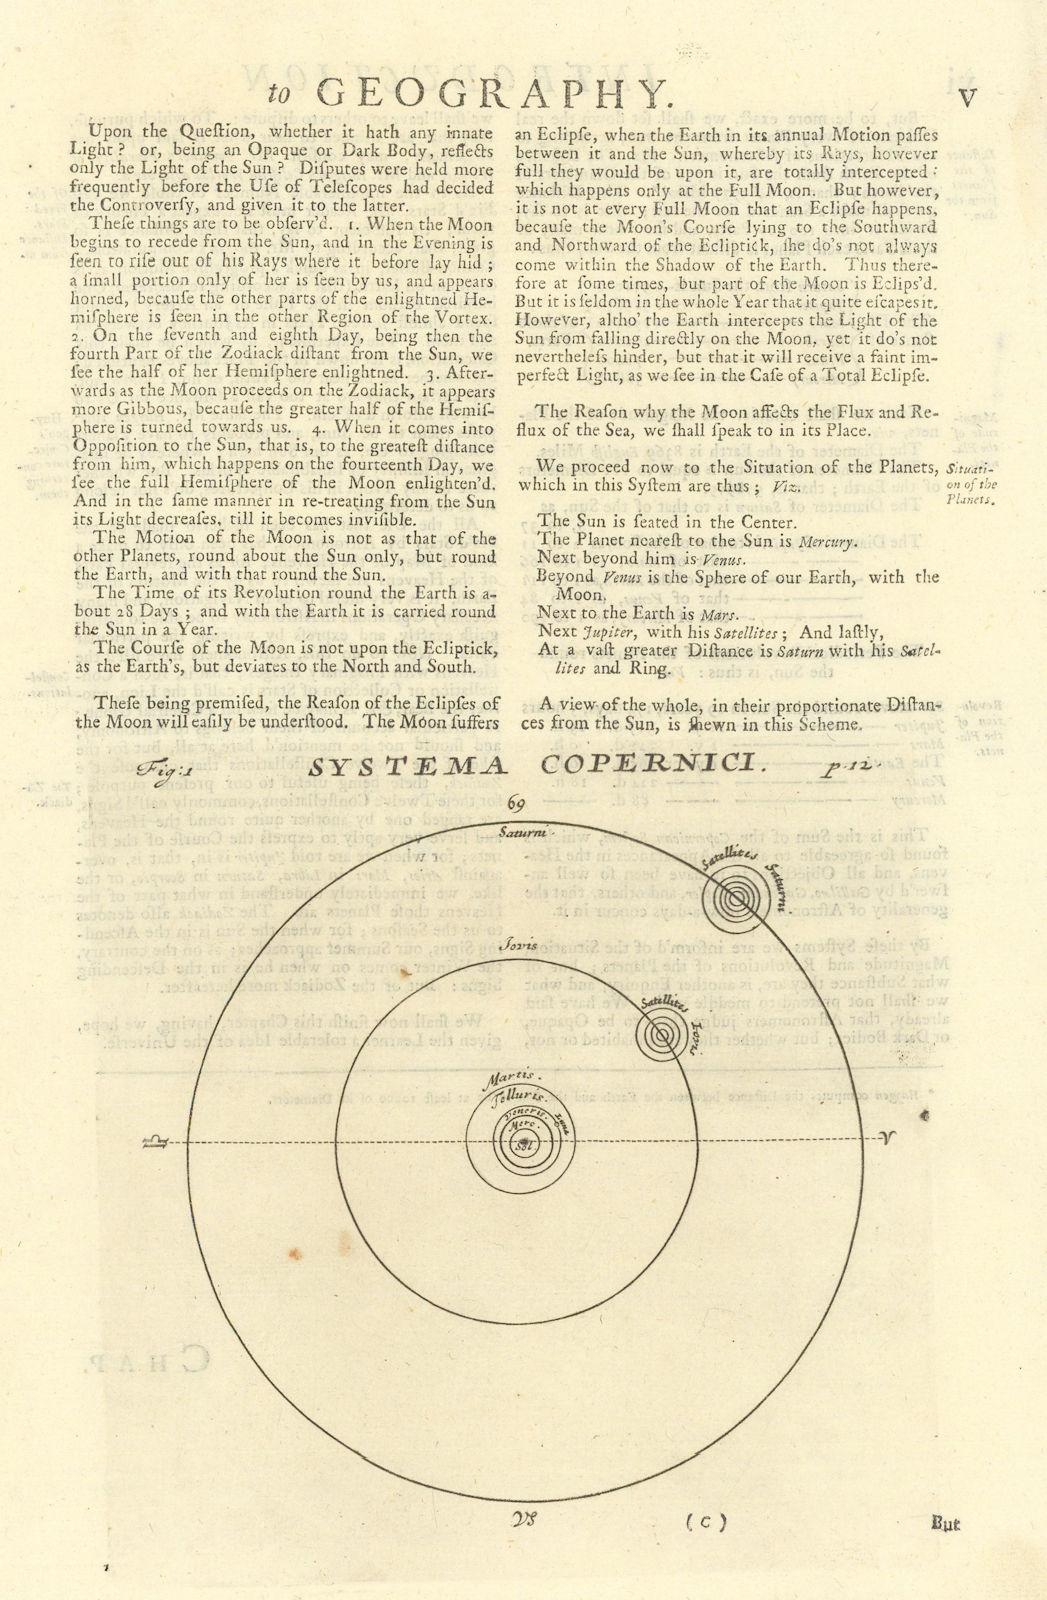 Systema Copernici. Heliocentric solar system according to Copernicus 1709